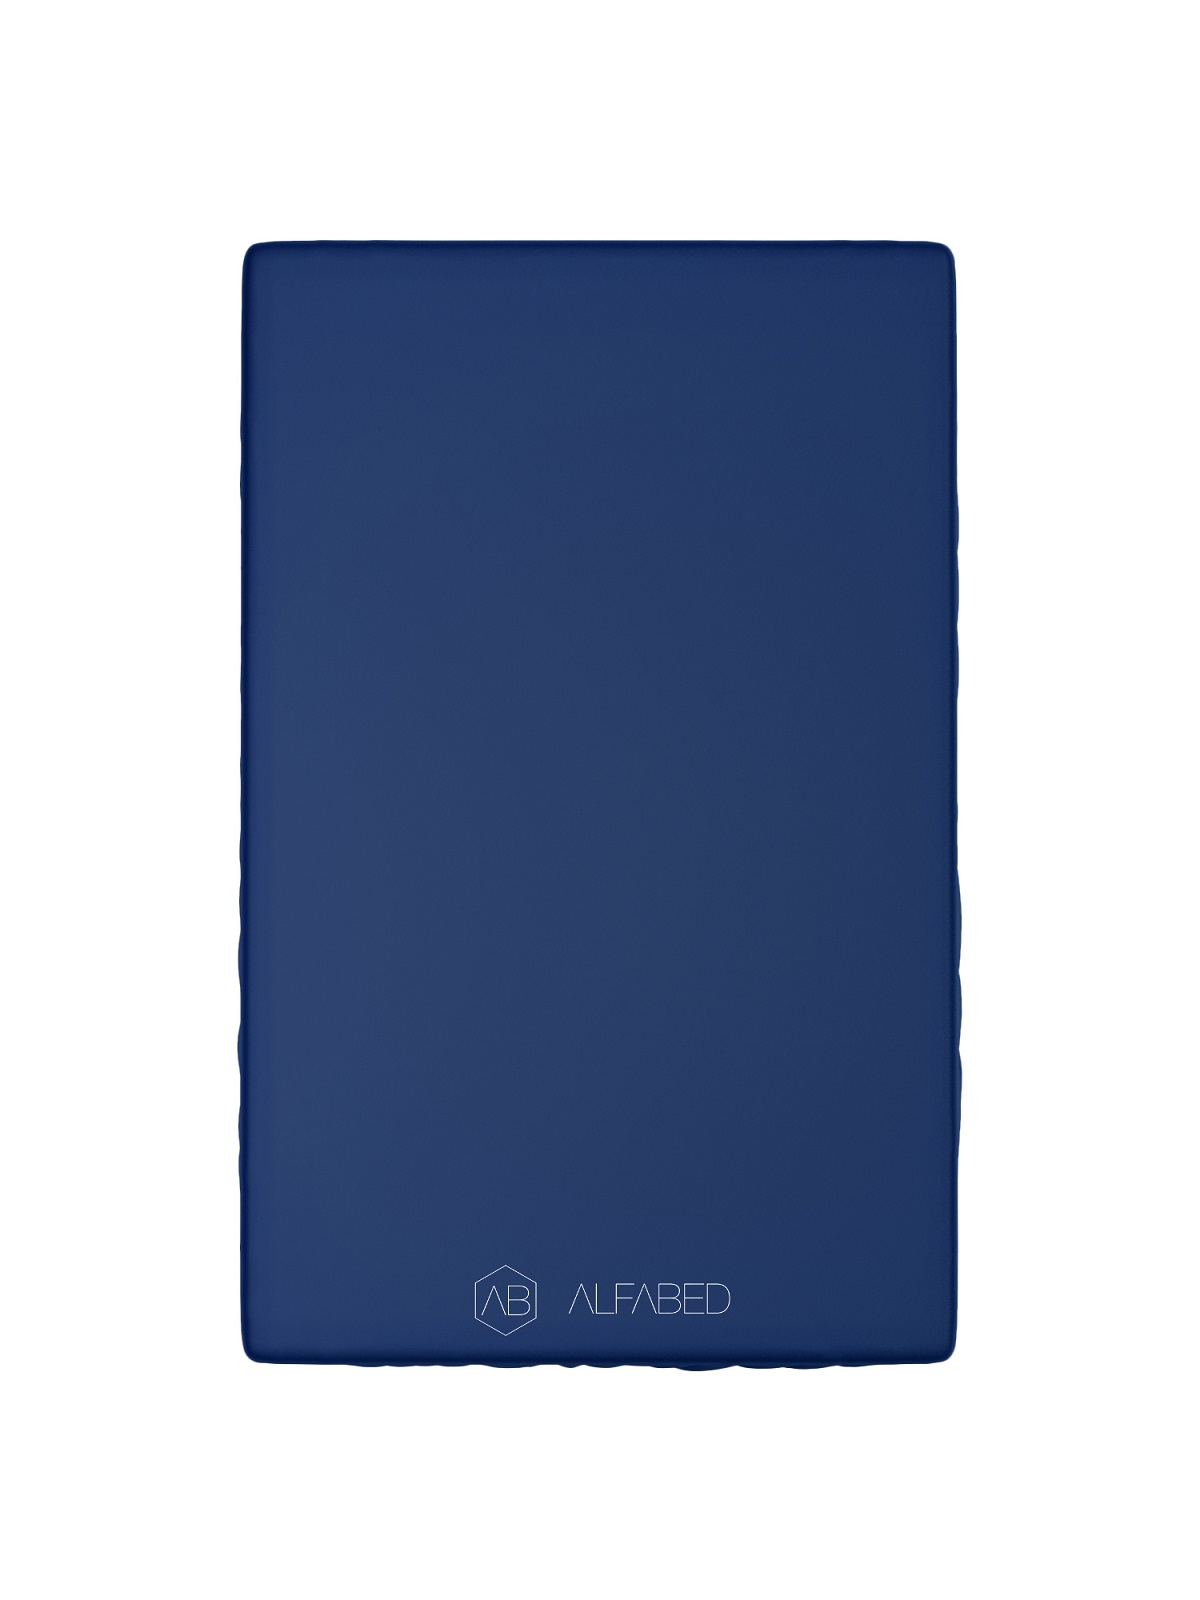 Pillow Top Fitted Sheet Royal Cotton Sateen Dark Blue H-10 